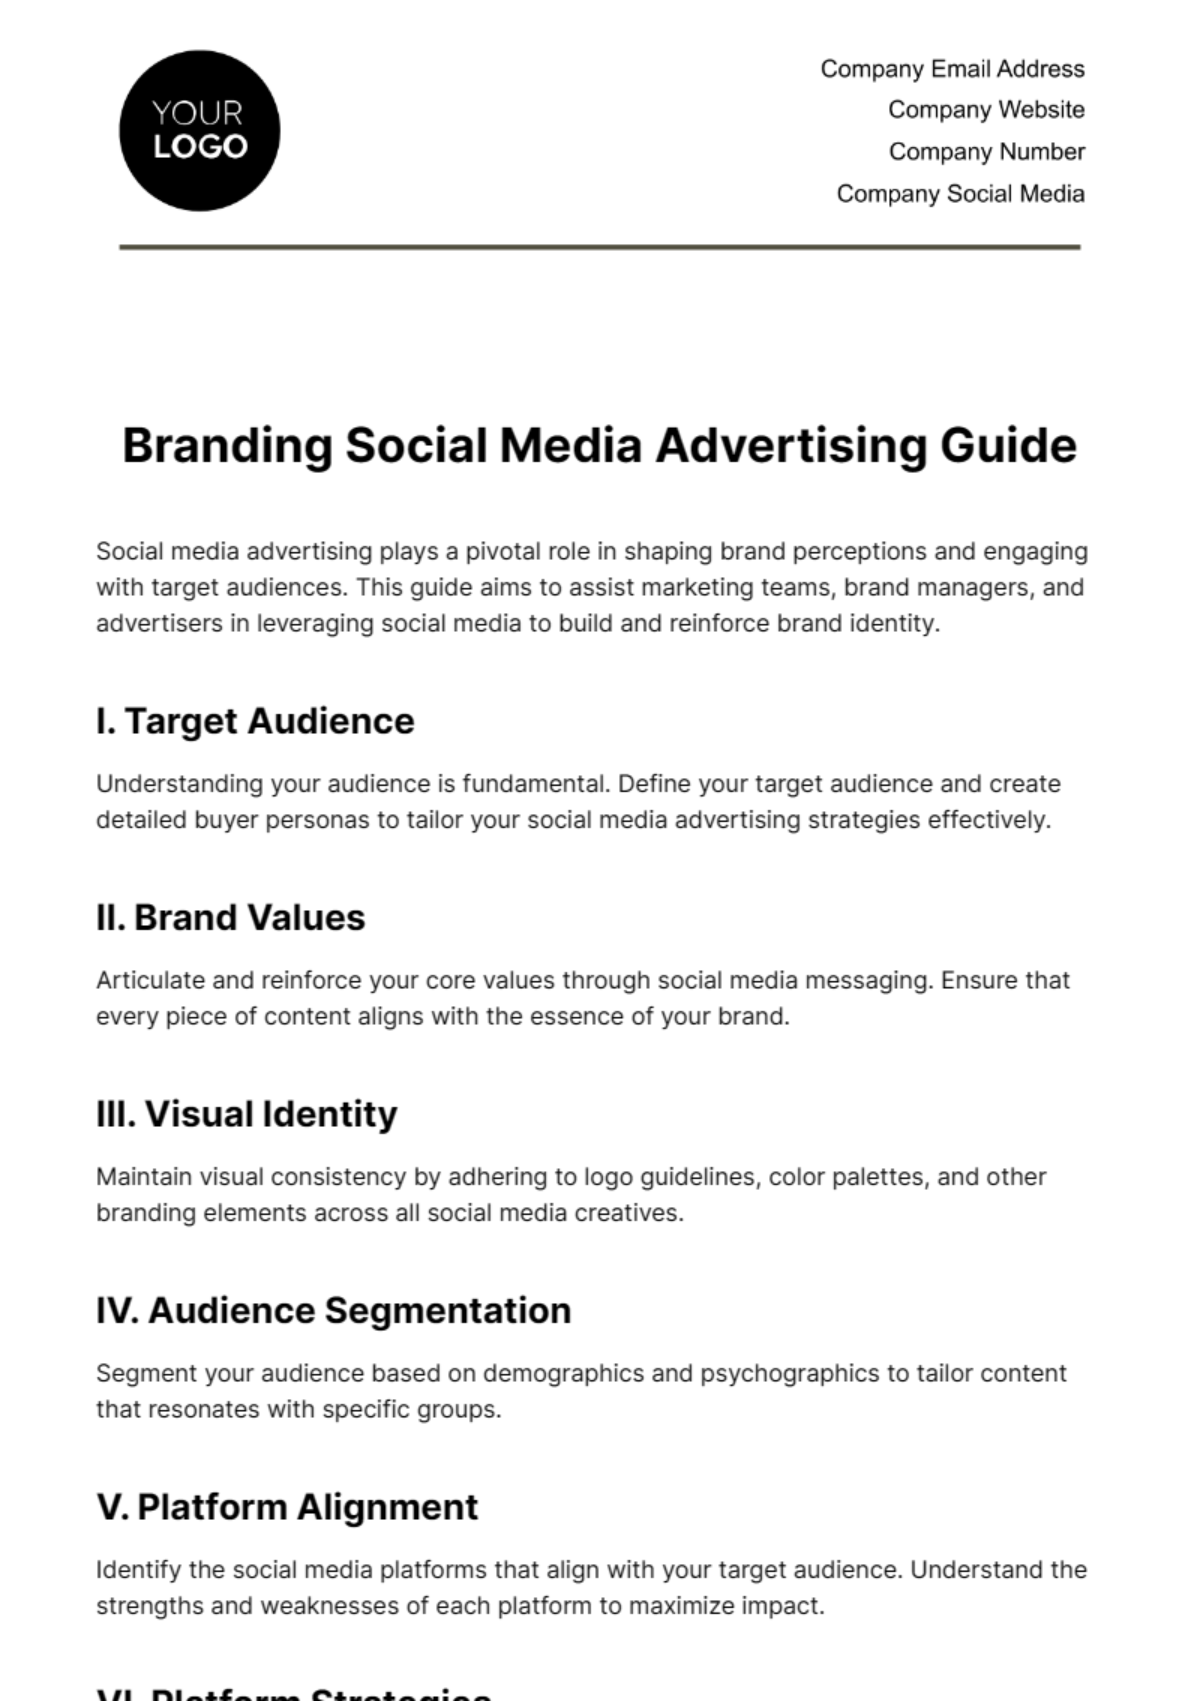 Free Branding Social Media Advertising Guide Template